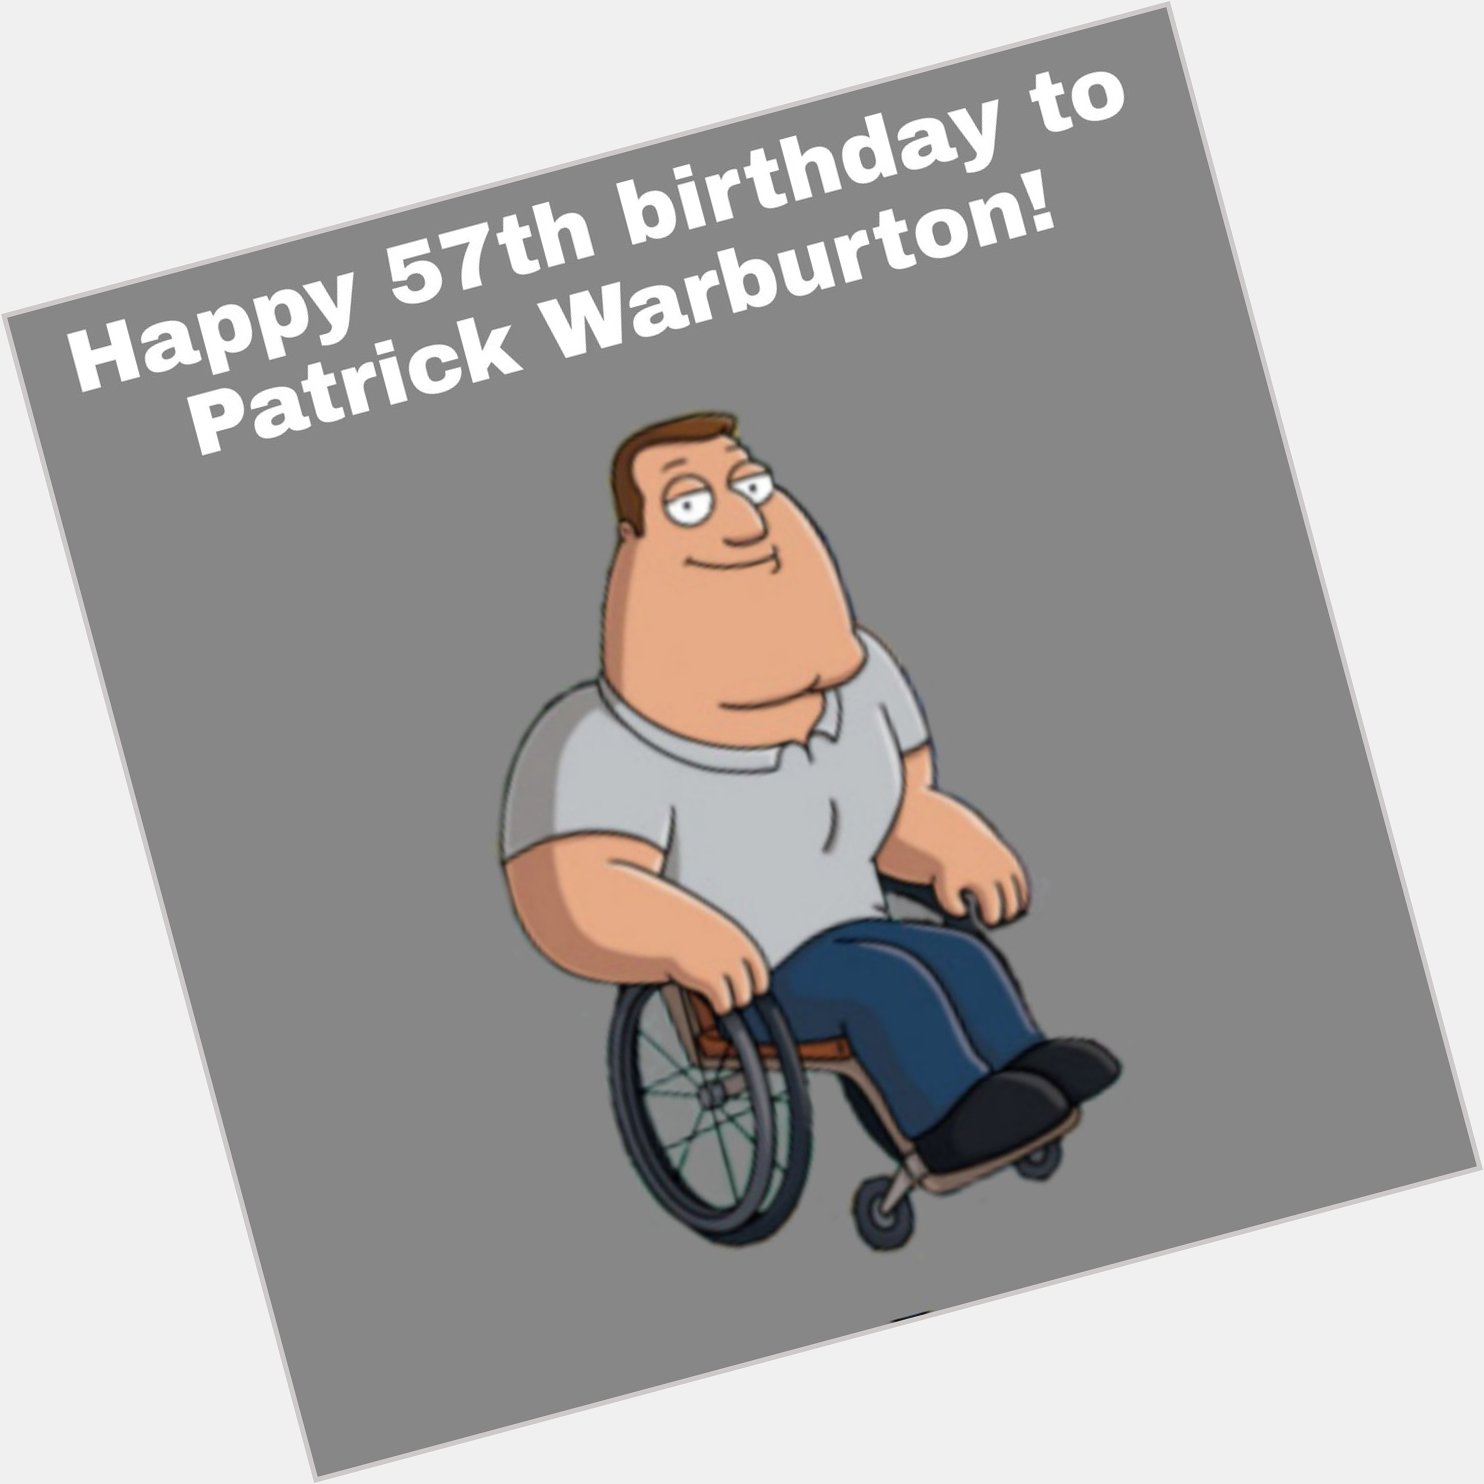 Happy 57th birthday to Patrick Warburton! 